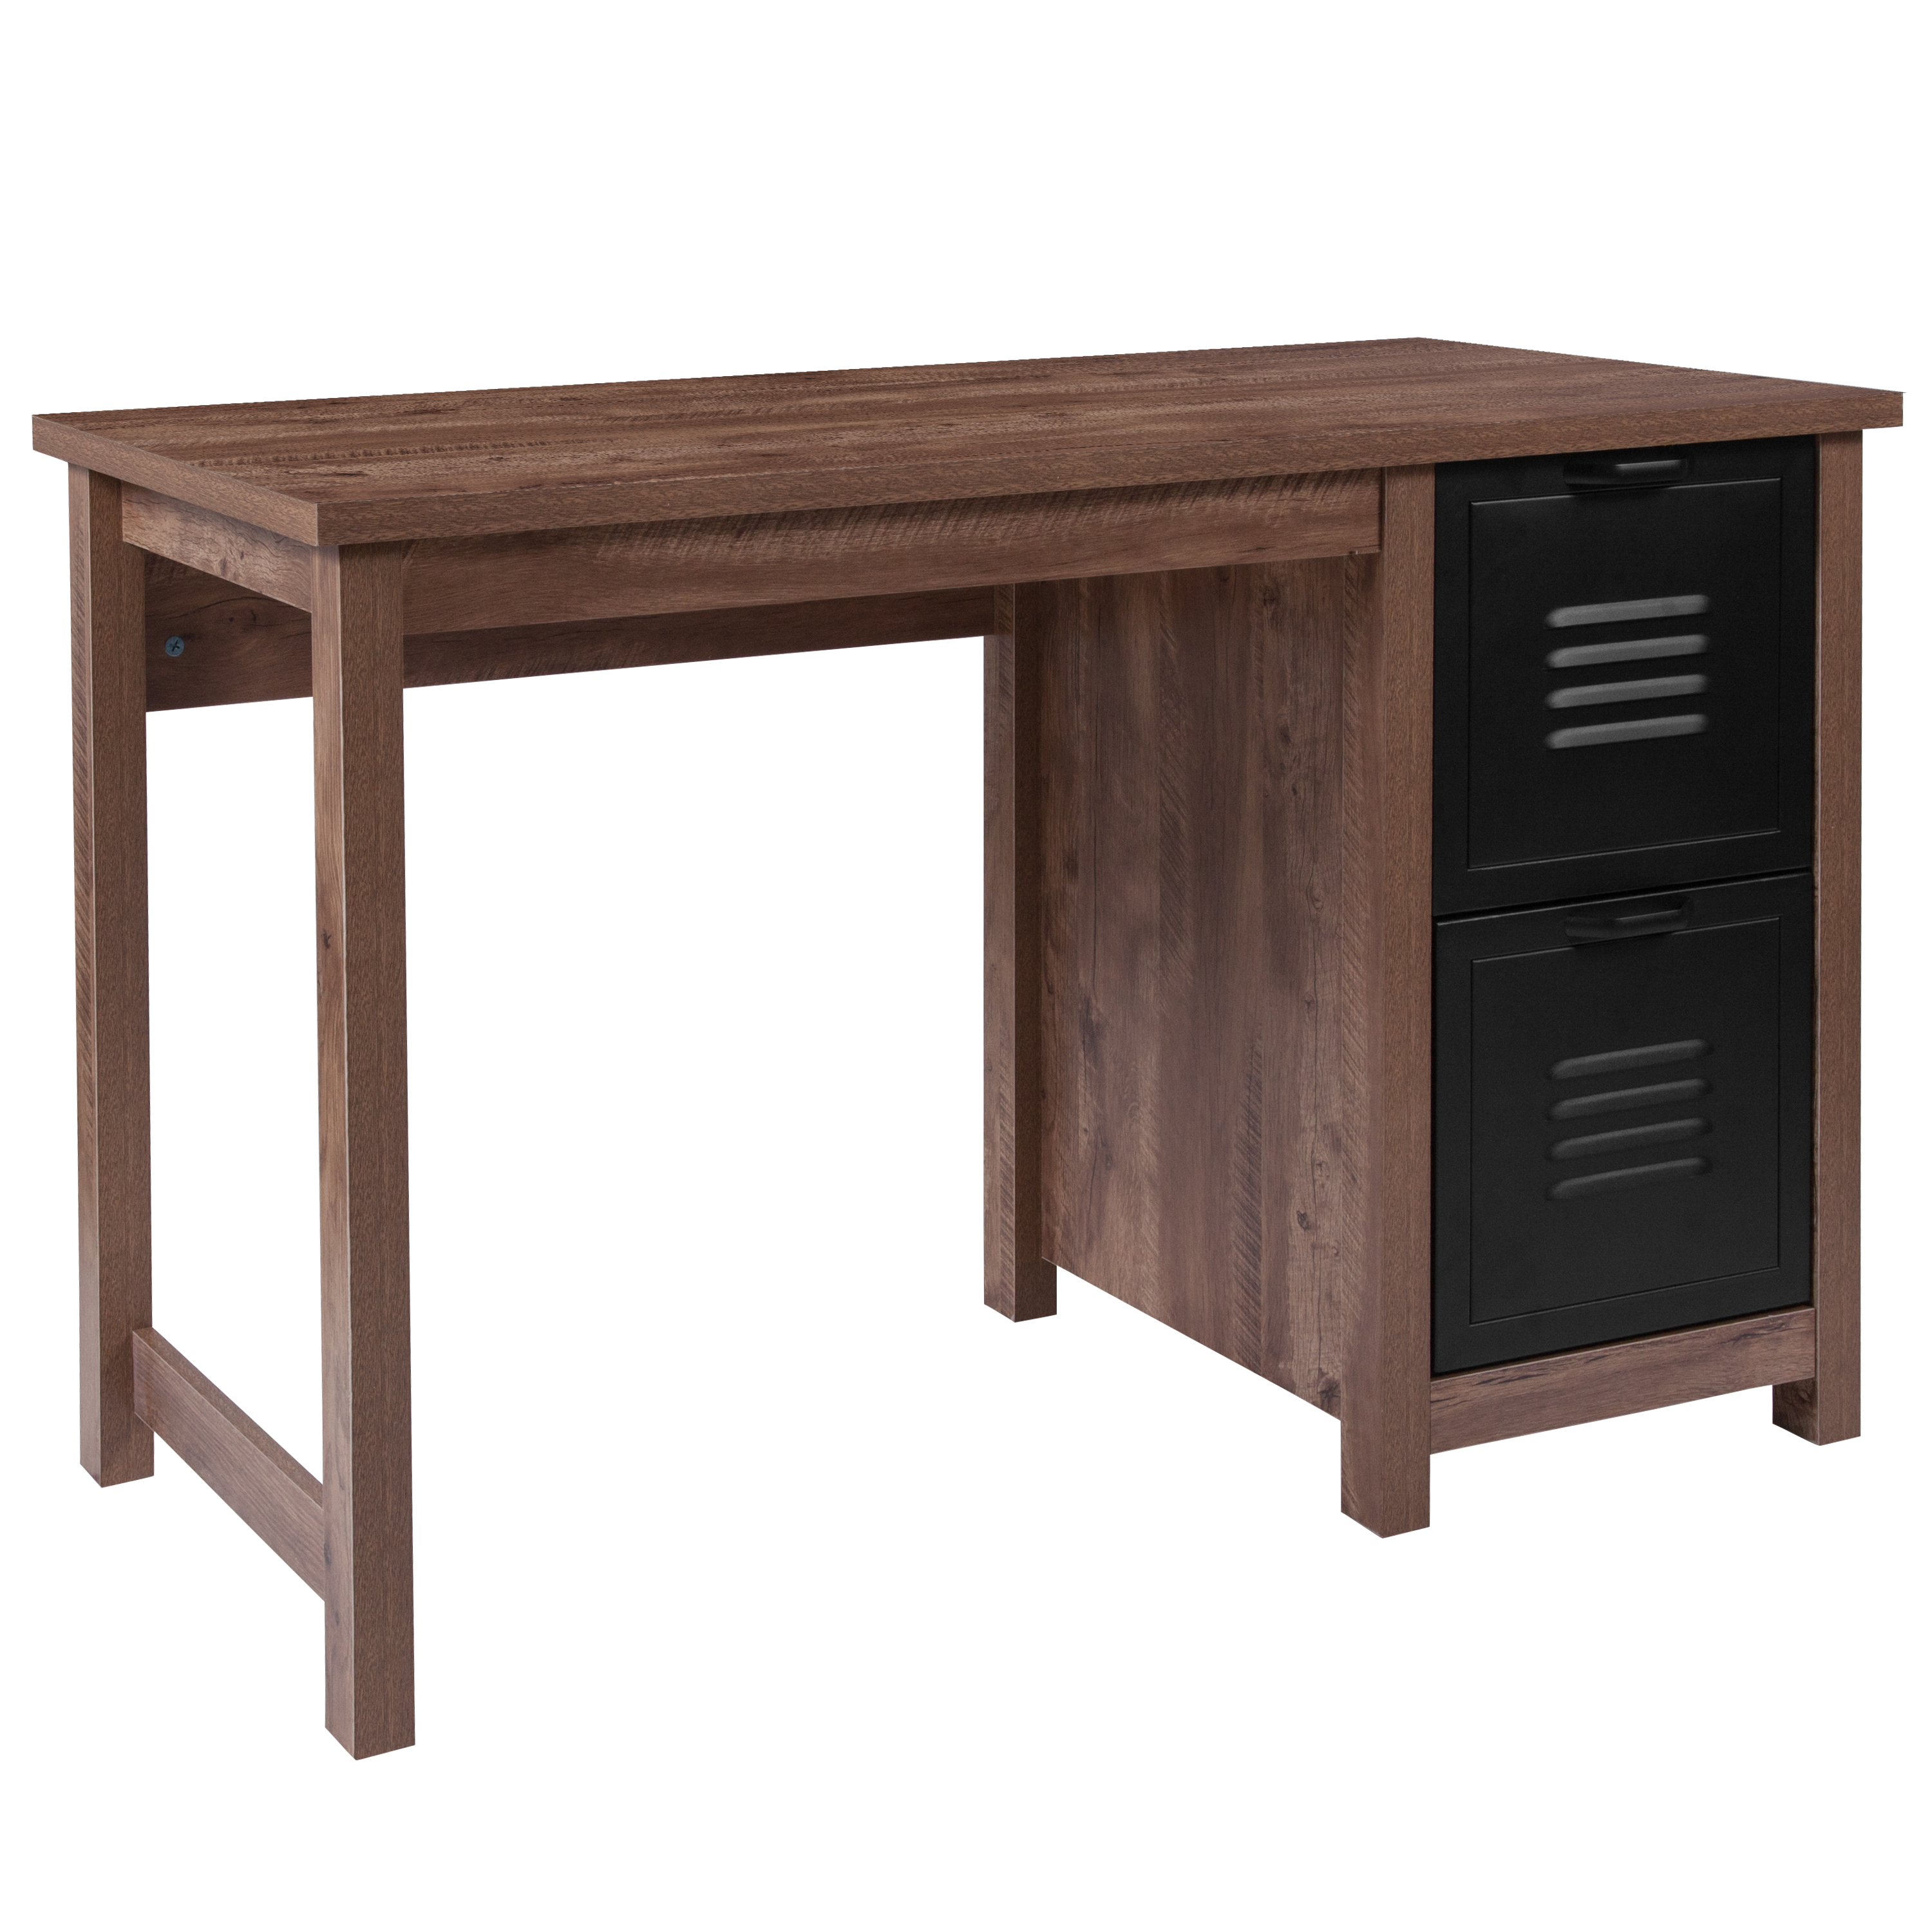 Flash Furniture NAN-JN-21736T-GG Crosscut Oak Wood Grain Finish Computer Desk with Metal Drawers